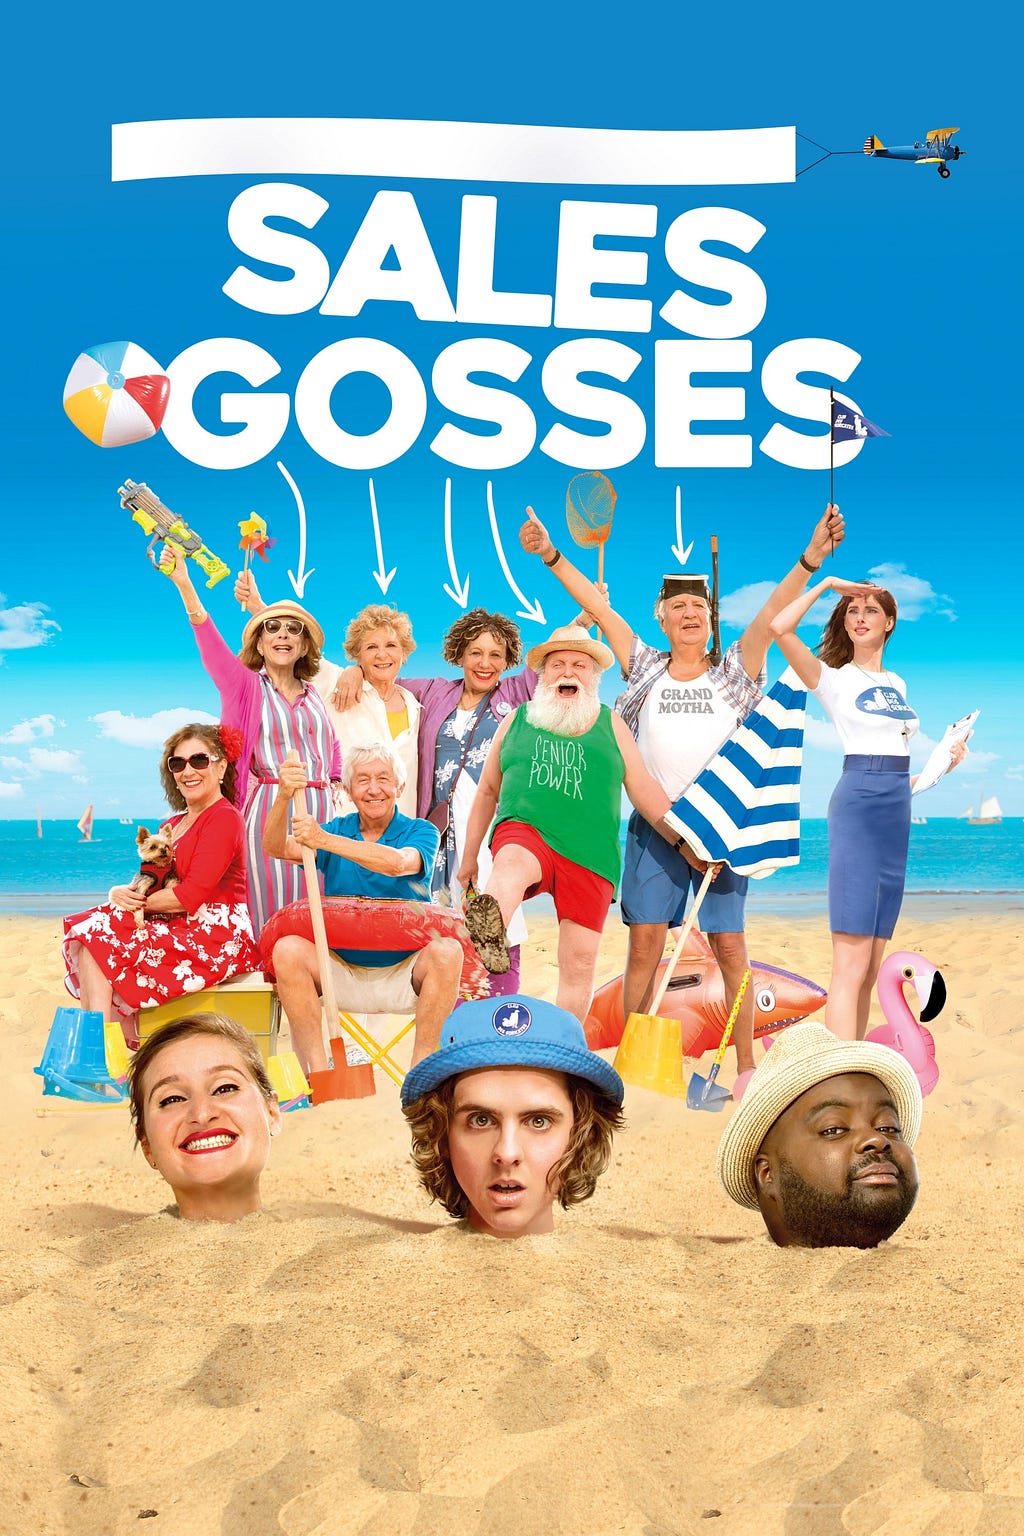 Sales gosses (2017) | Poster